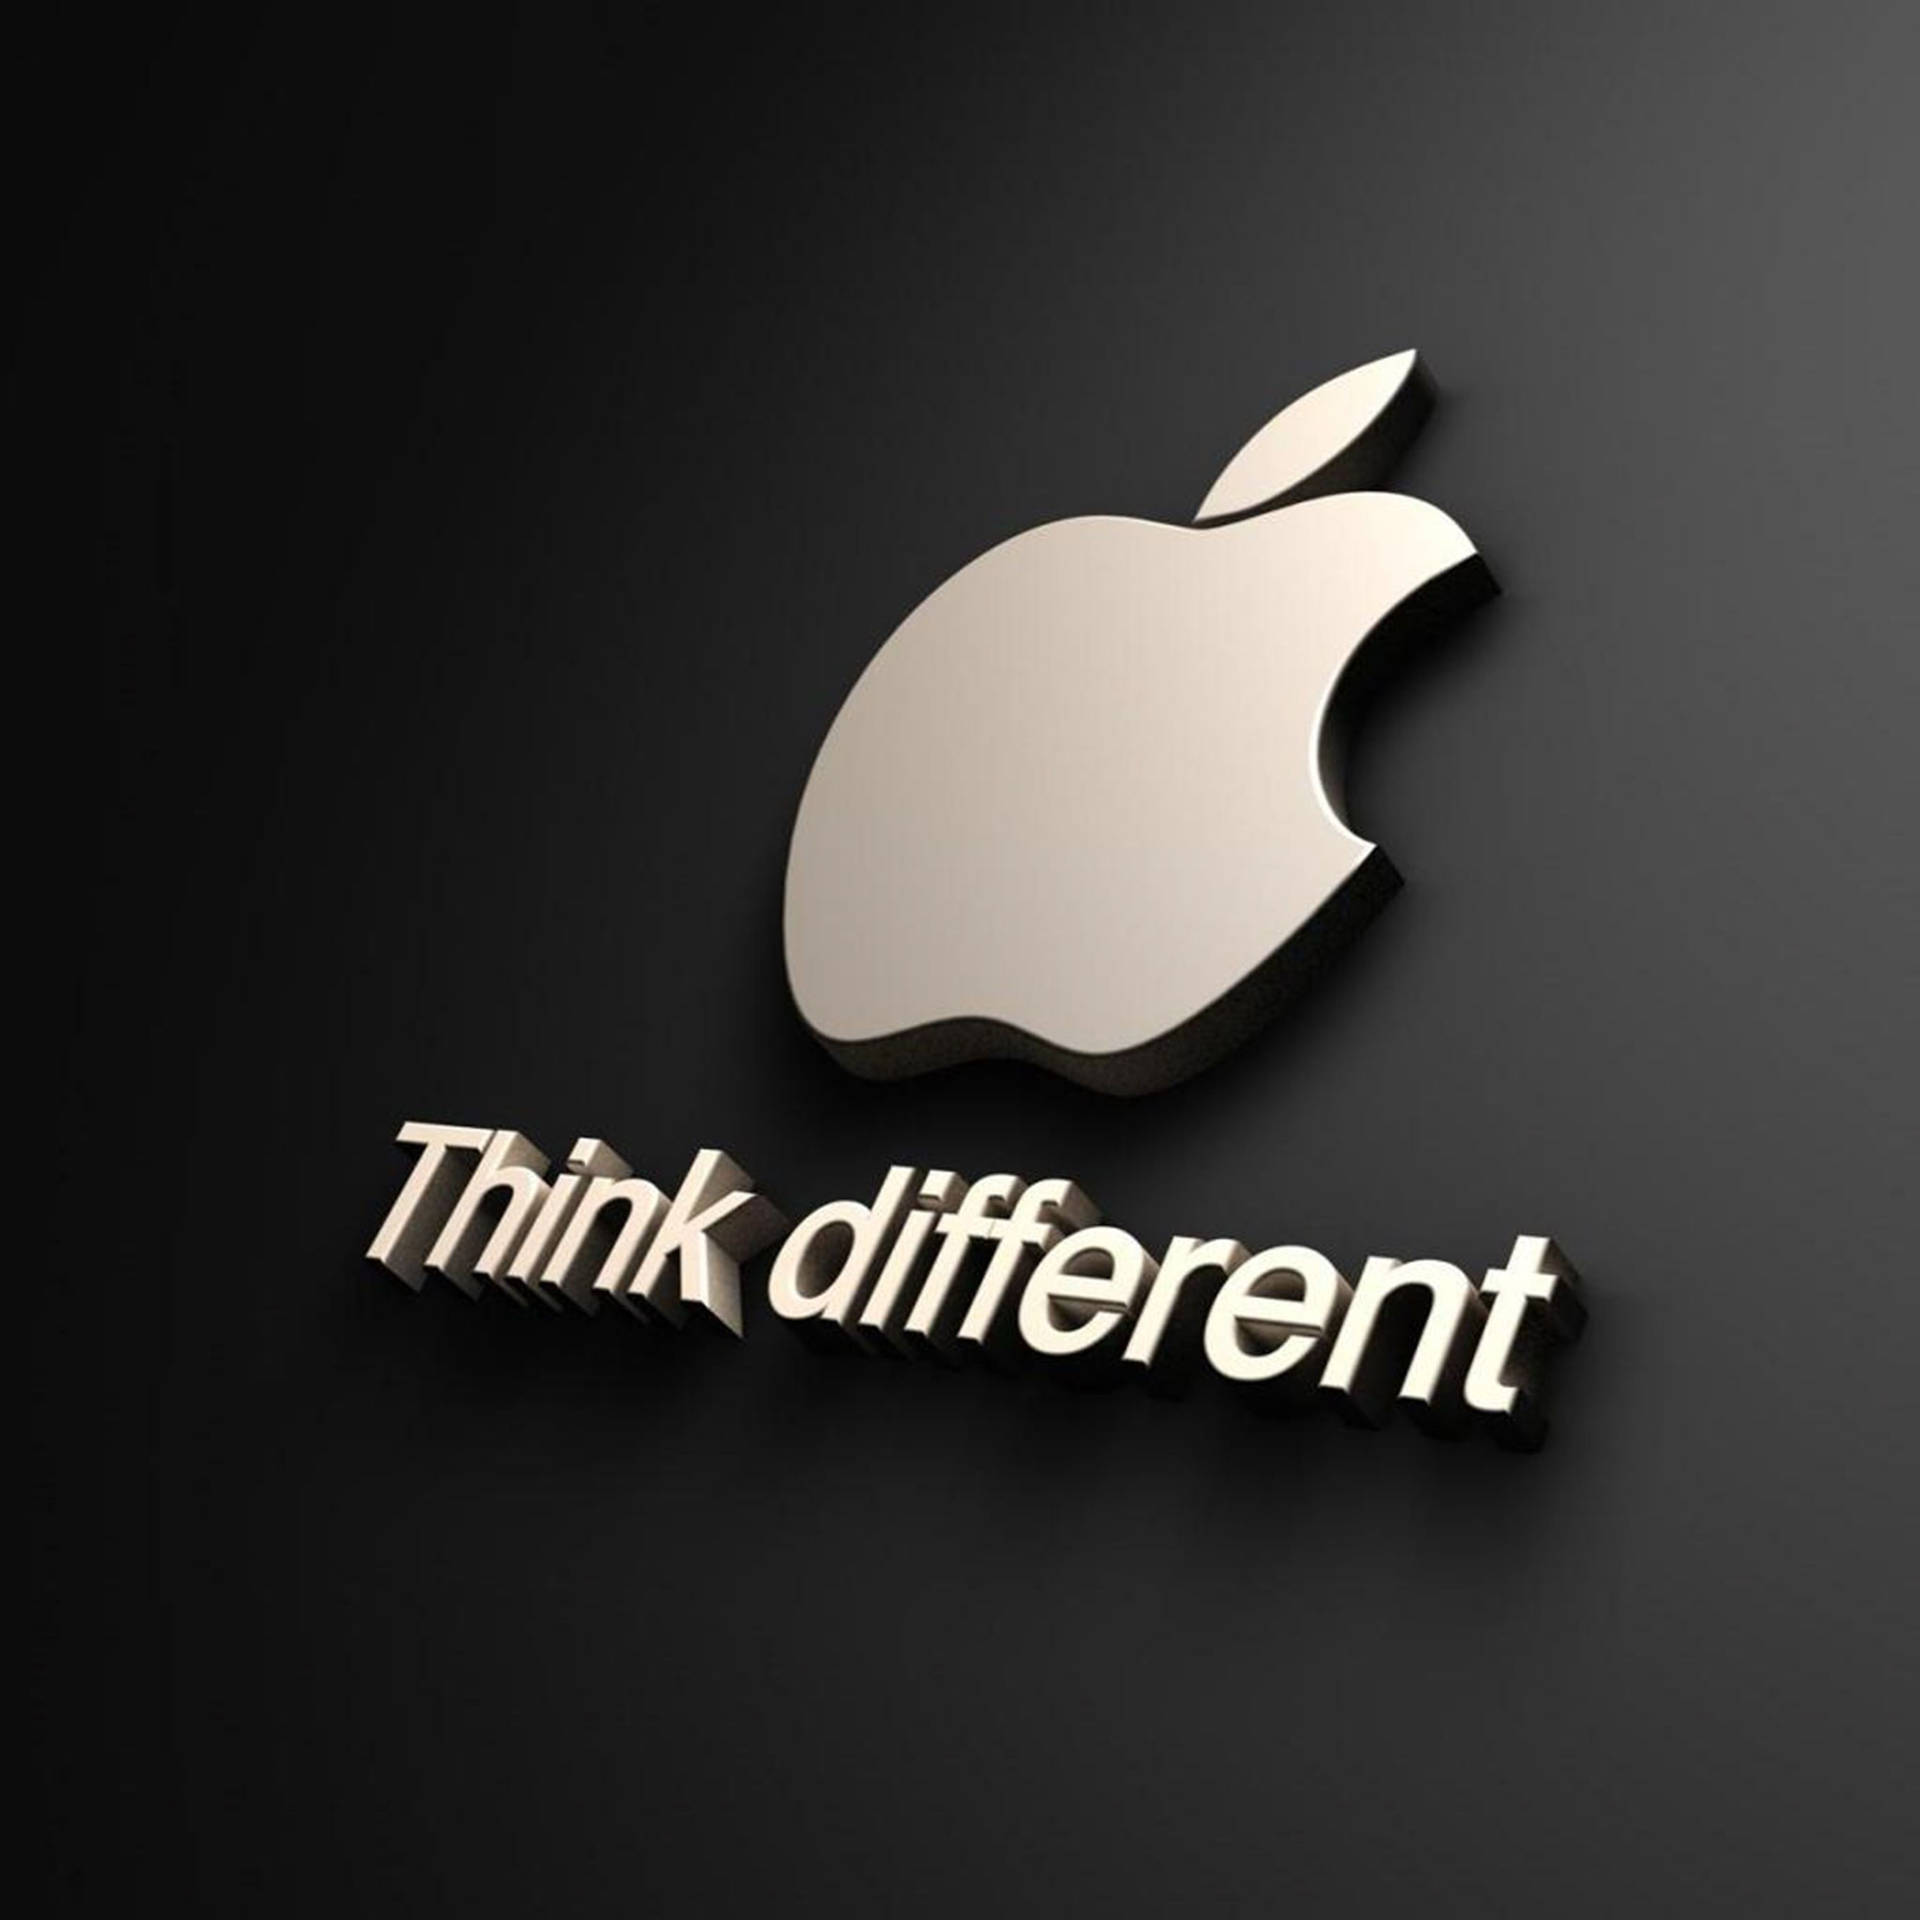 3d Apple Iphone Logo And Slogan